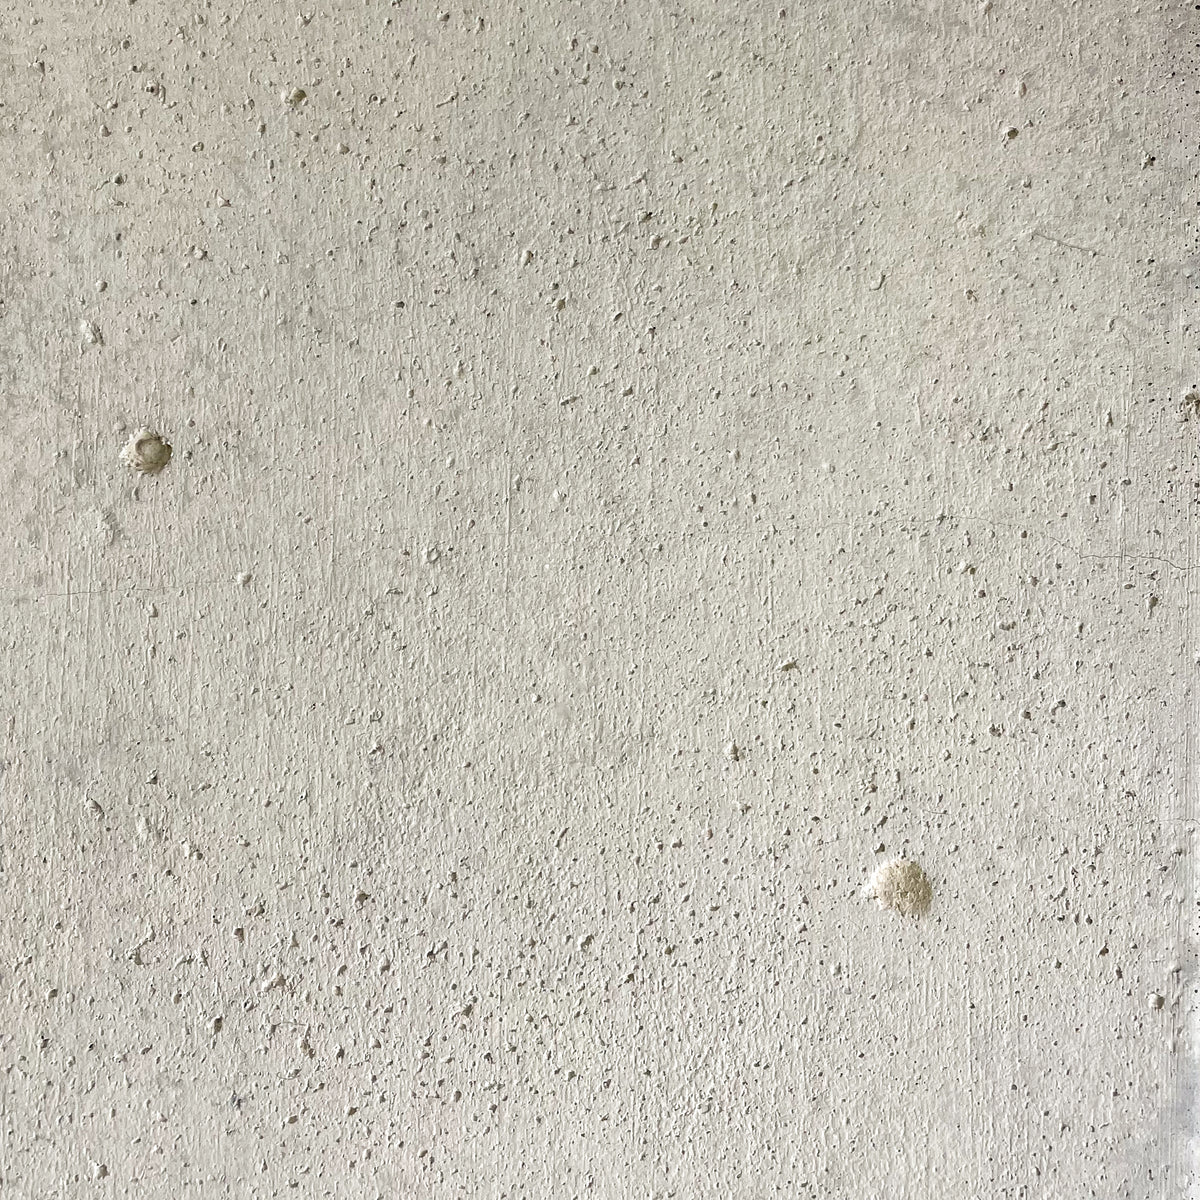 RealCast 24x48 Concrete Slab - Natural Grey